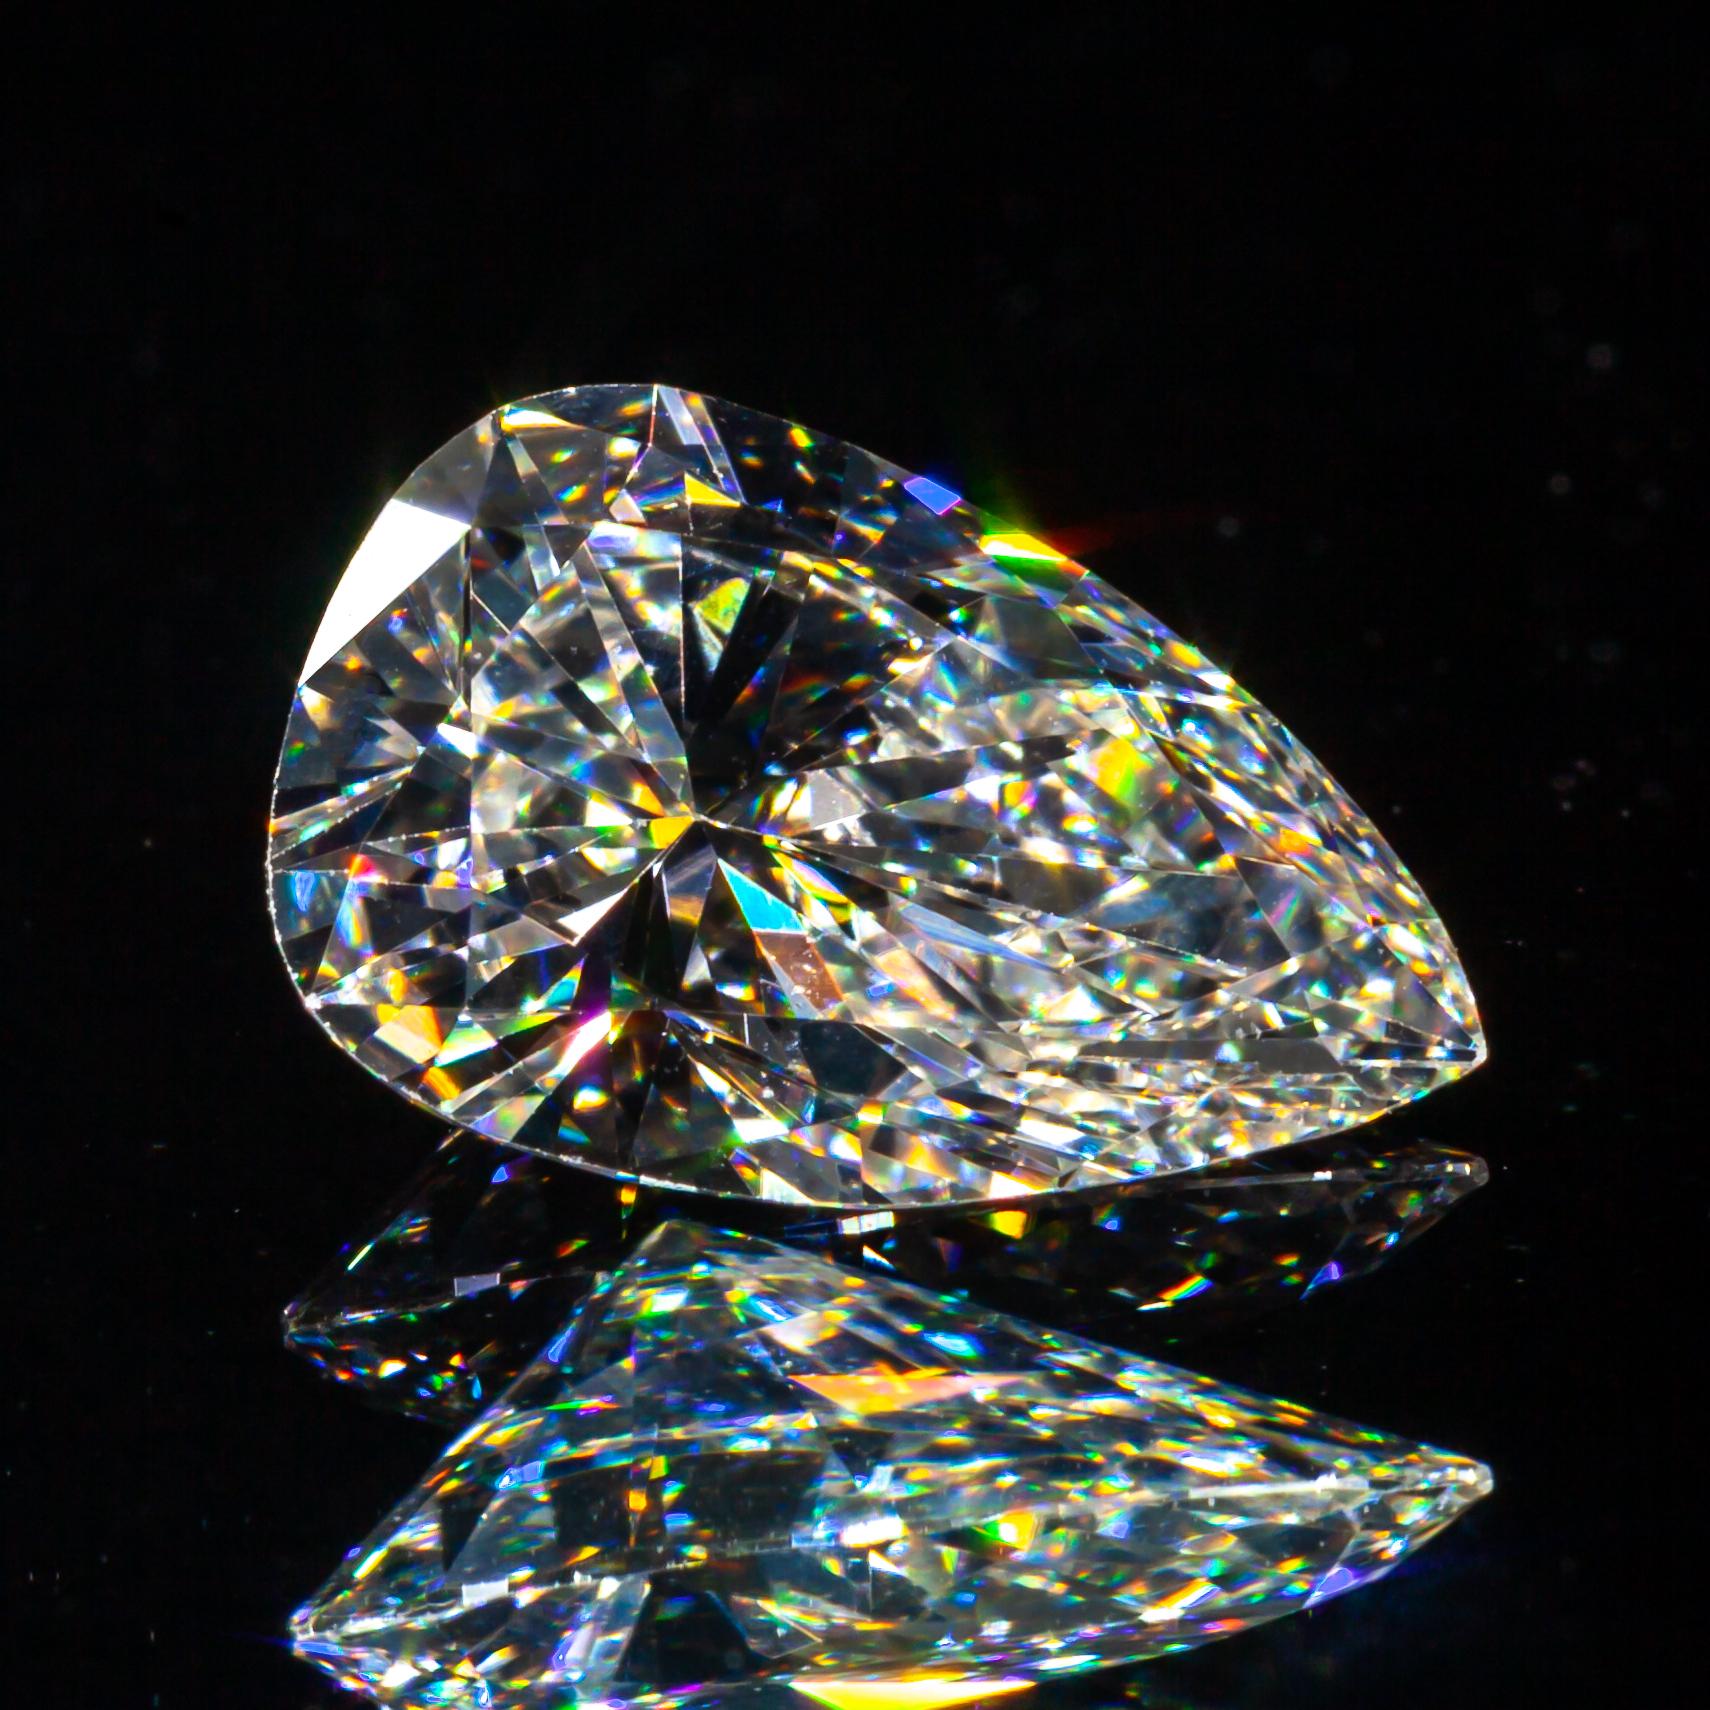 1.26 Carat Loose H / VS2 Pear Shaped Cut Diamond GIA Certified

Diamond General Info
Diamond Cut: Pear
Measurements: 9.33  x  6.17  -  3.78 mm

Diamond Grading Results
Carat Weight:1.26
Color Grade: H
Clarity Grade: VS2

Additional Grading